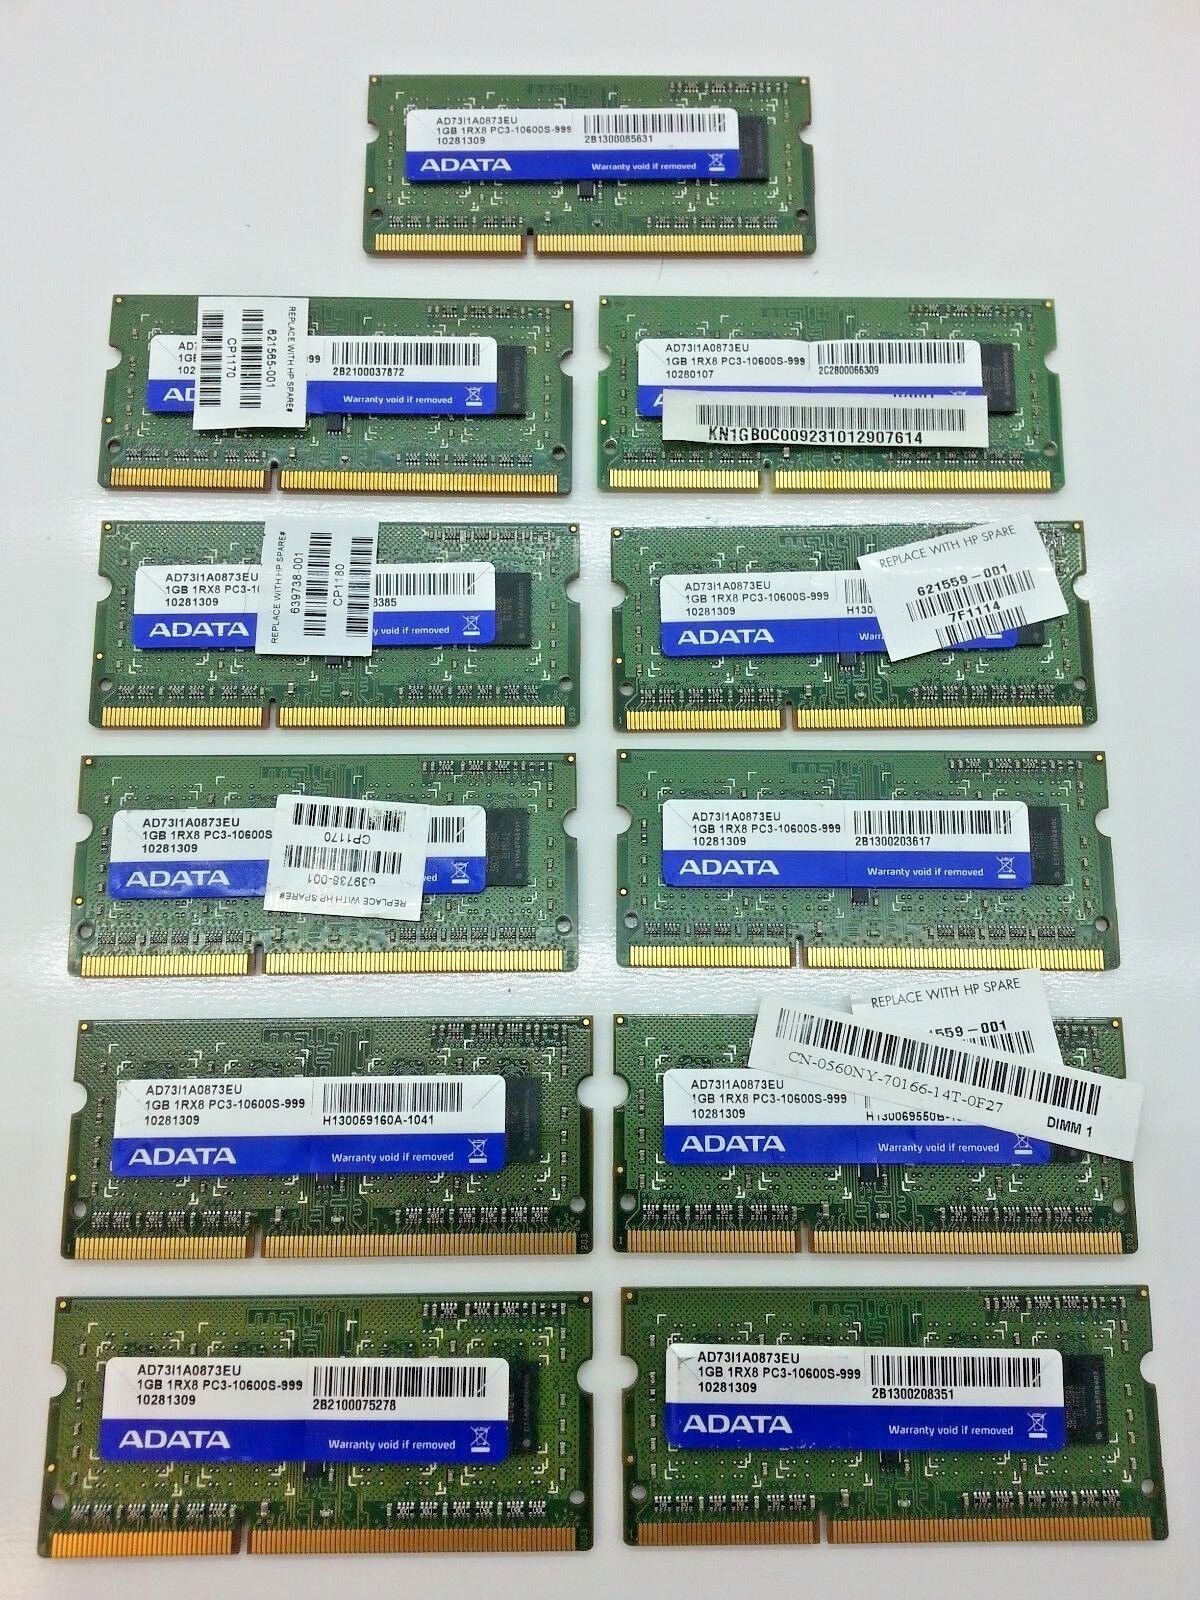 Lot of 11 ADATA 1GB 1Rx8 Memory RAM PC3-10600S-999 AD73I1A0873EU 639738-001 / 71